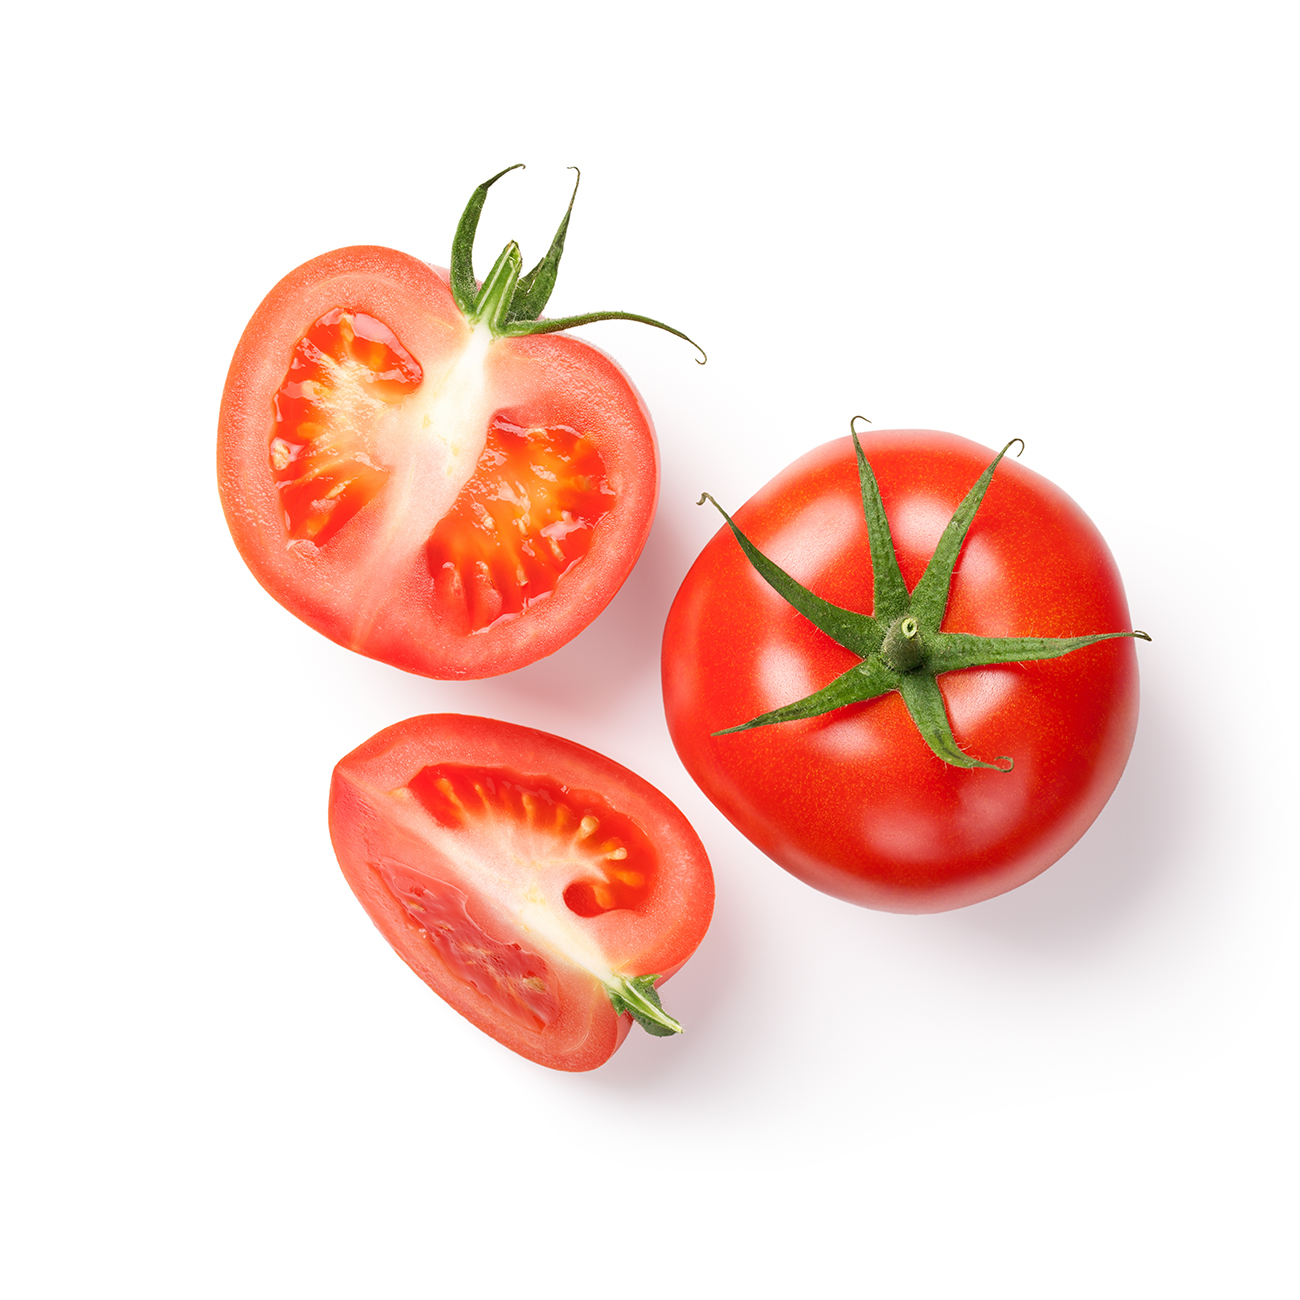 Tomatoes, standard